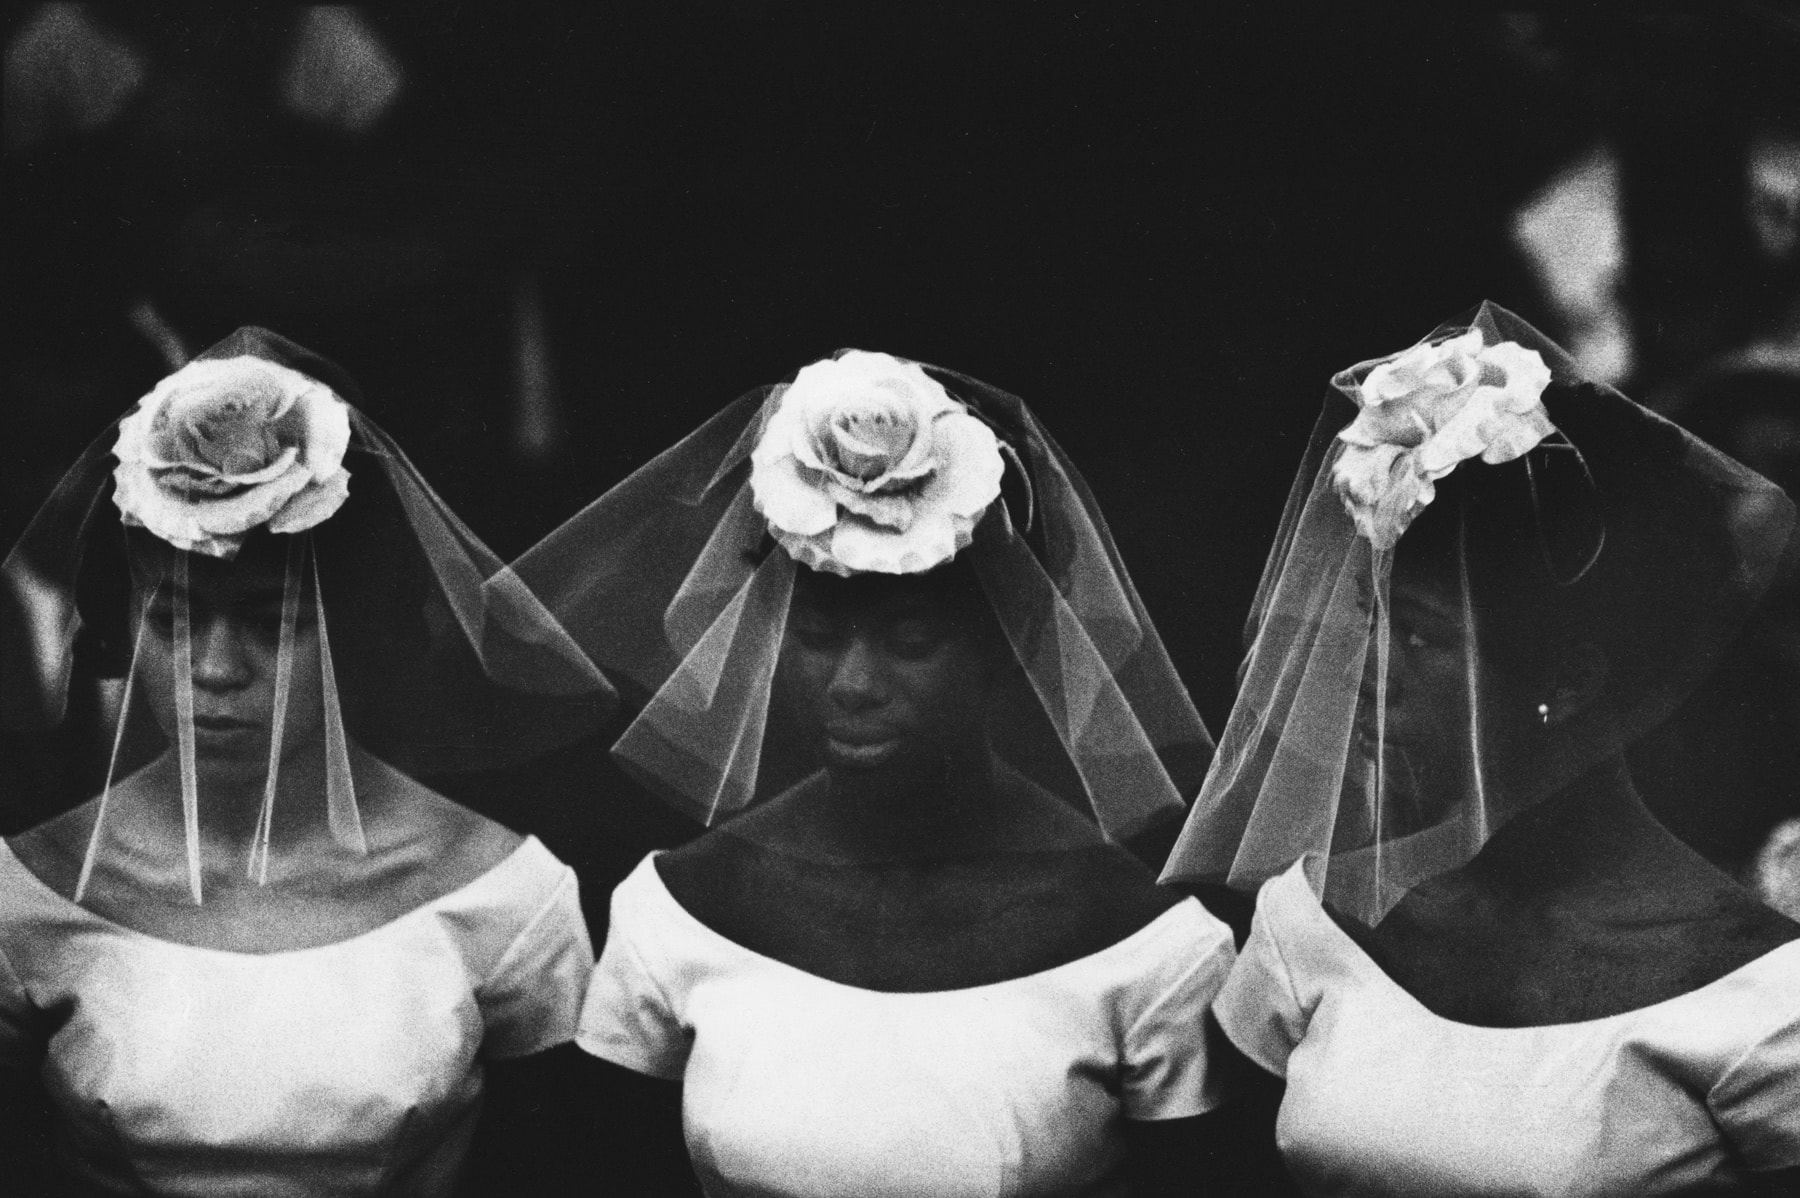 Time of Change (three bridesmaids), Bruce Davidson, 1962